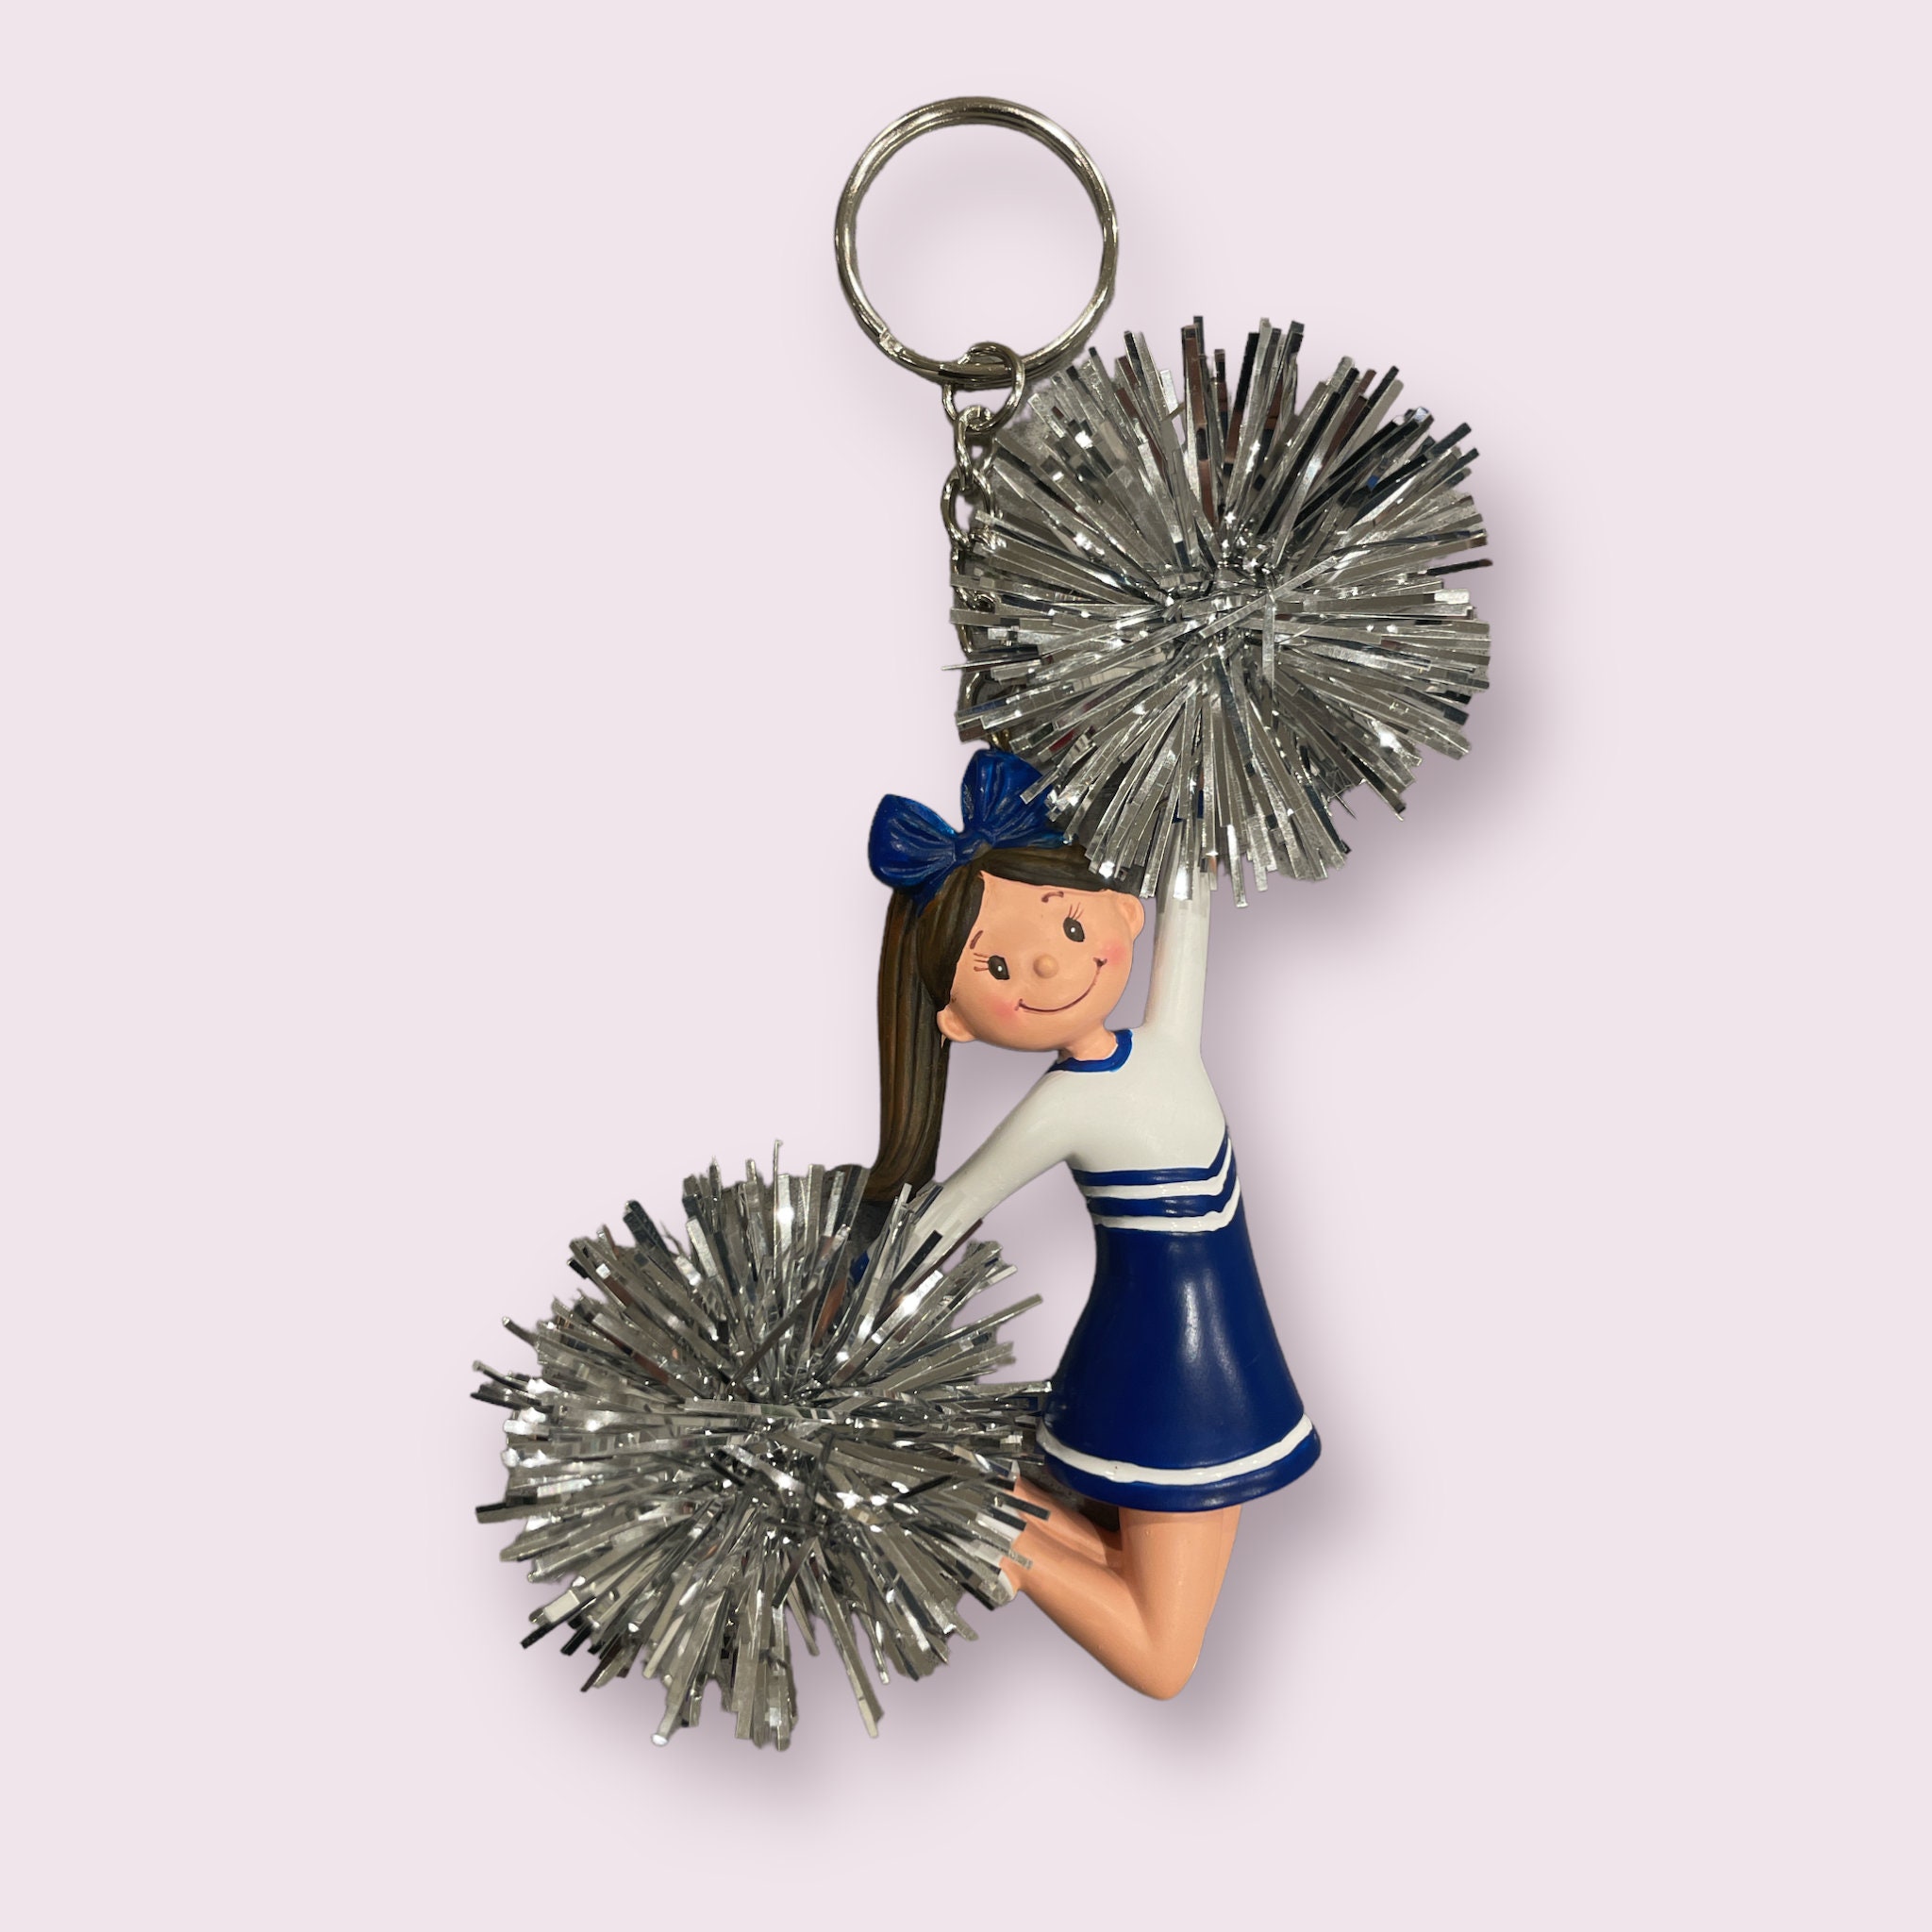 TheNoelbox Cheerleader Keychain